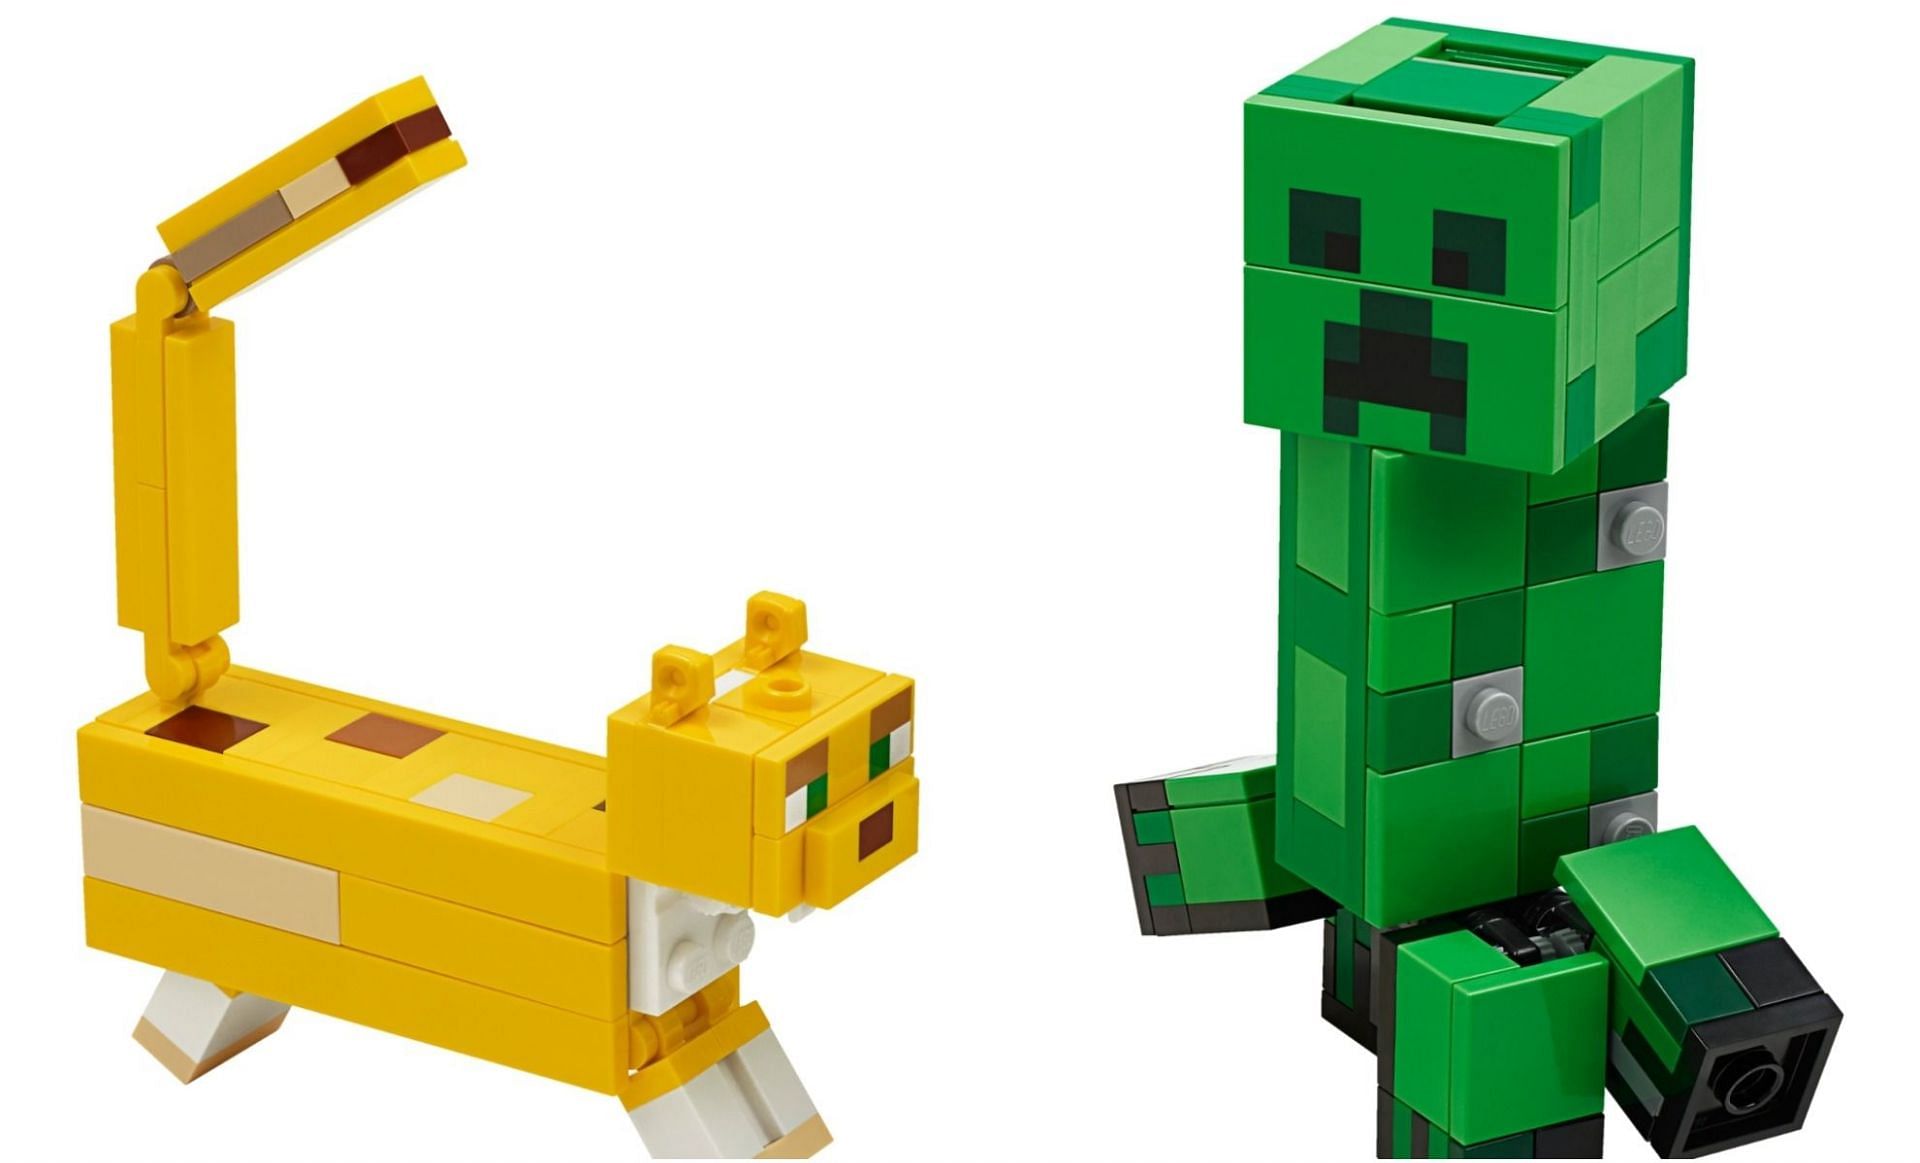 Mortal enemies: LEGO figures of a Creeper and a cat (Image via LEGO)